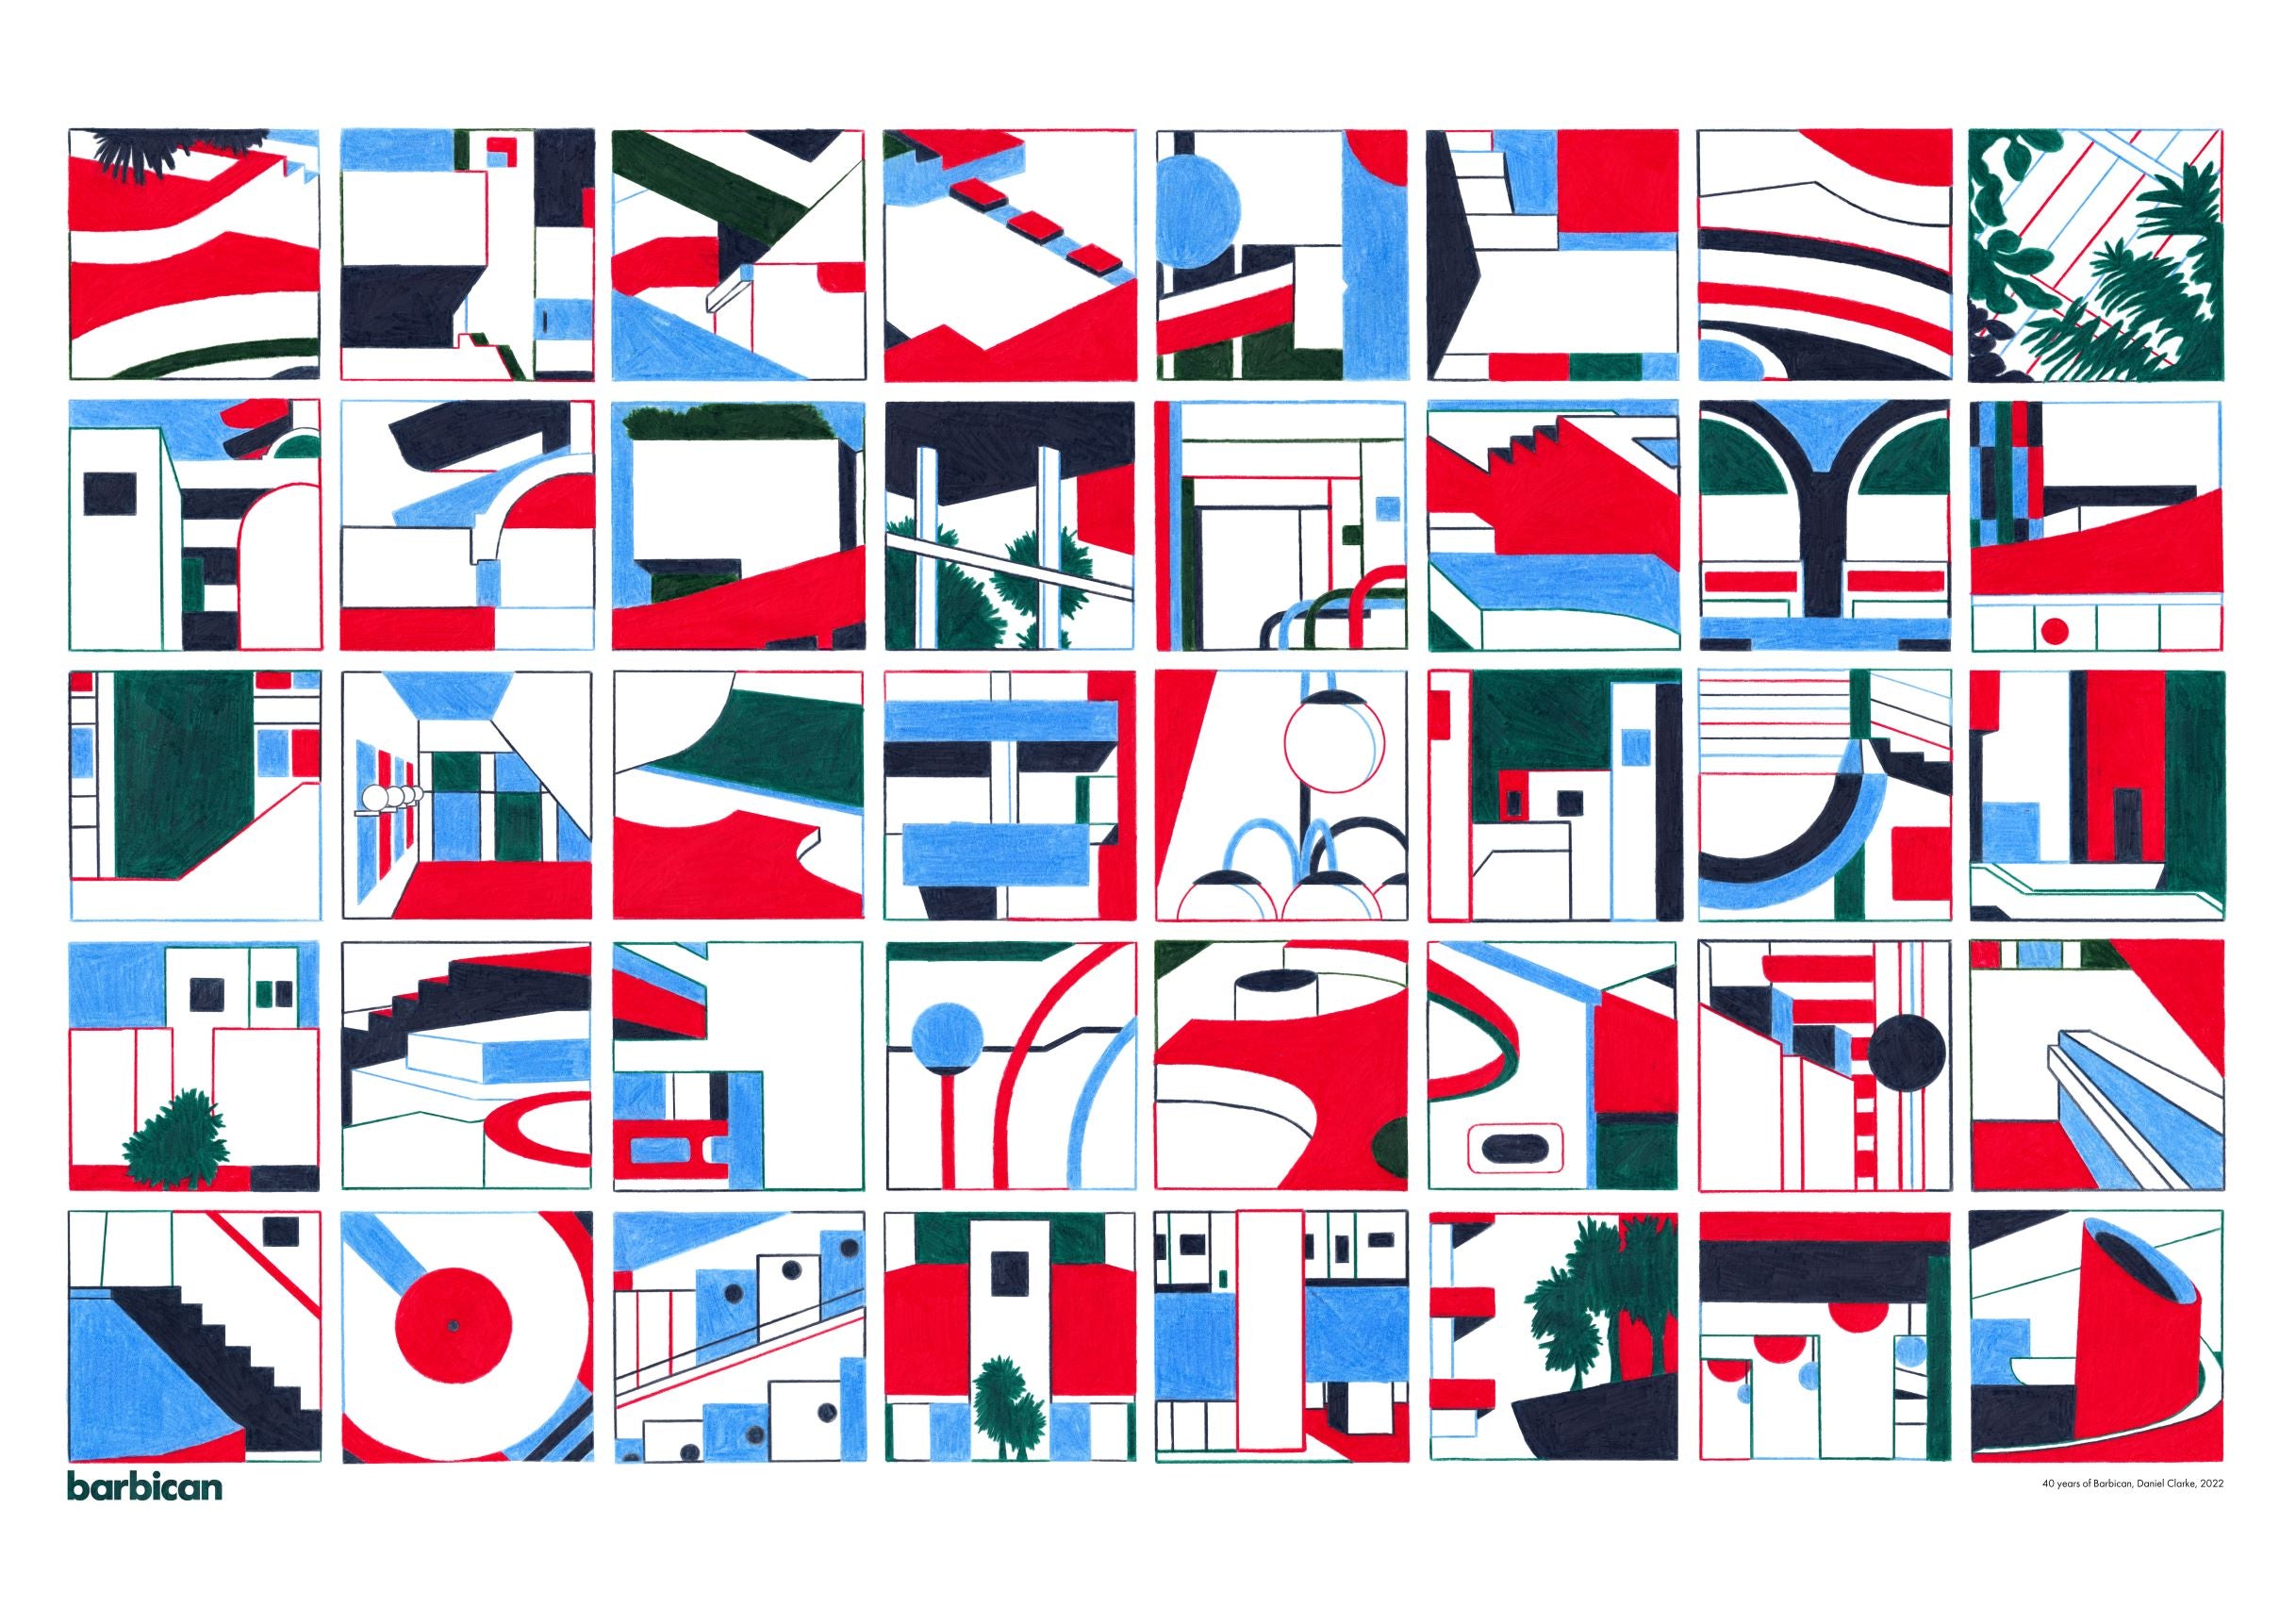 40 Years of Barbican Print by Daniel Clarke